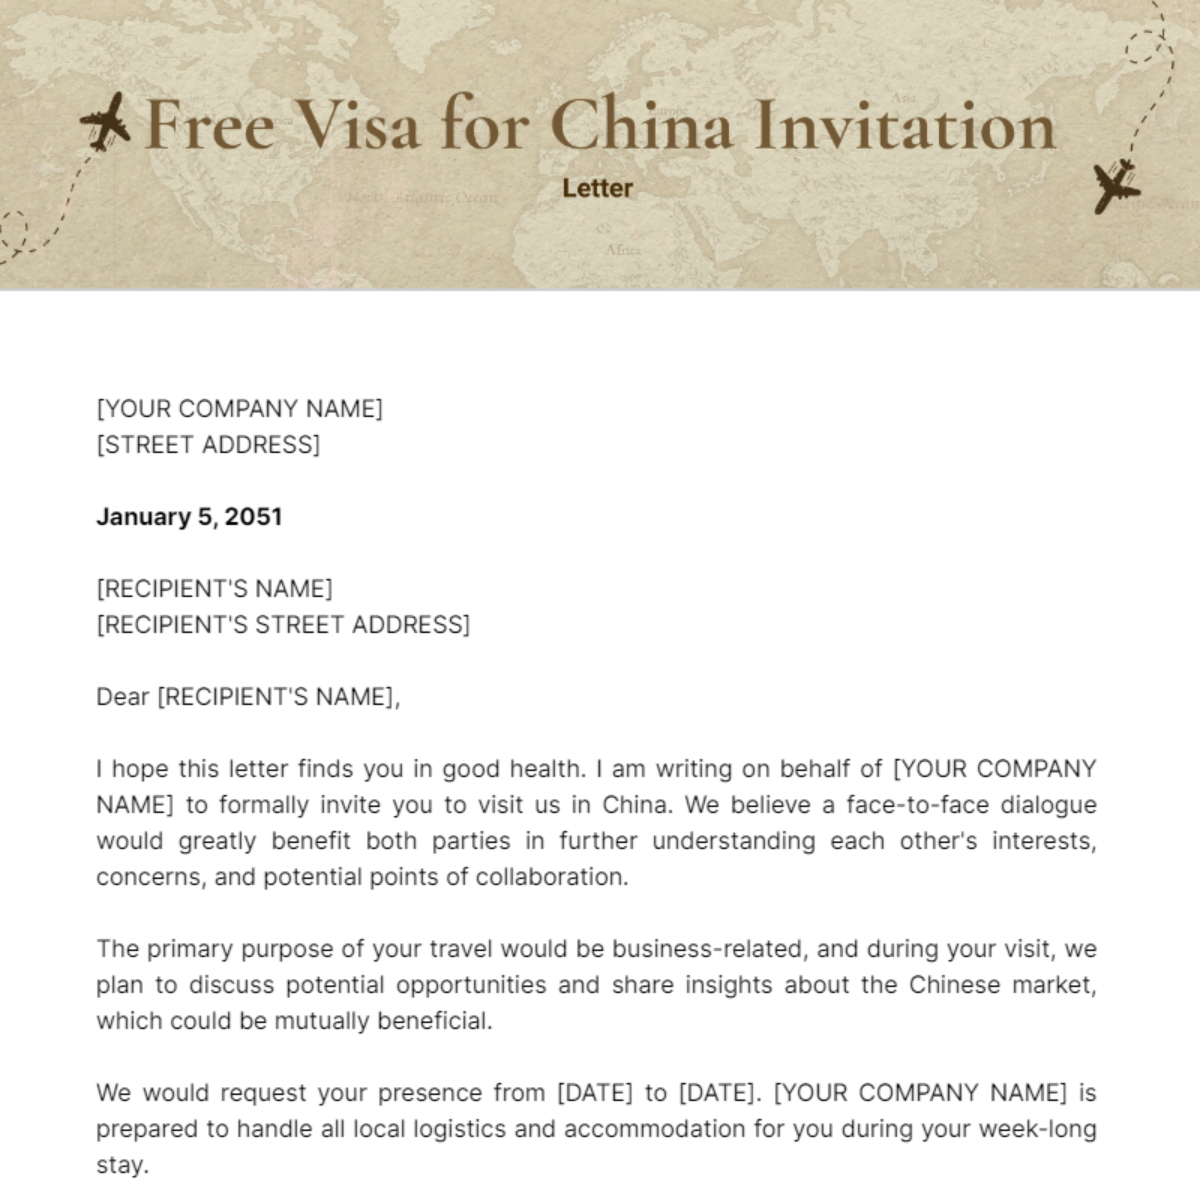 Visa for China Invitation Letter Template